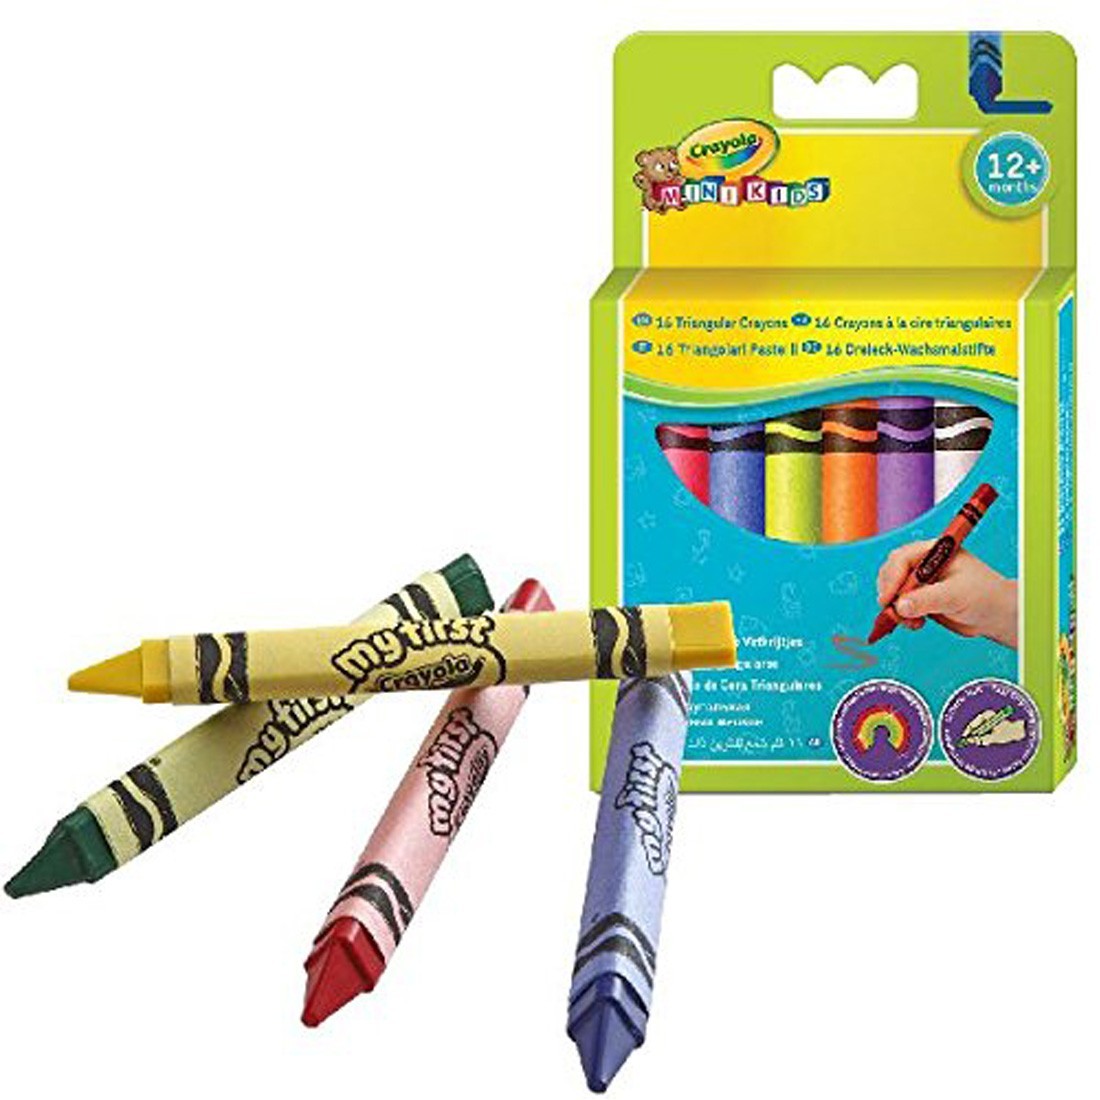 Crayola Beginnings Crayons, Triangular, Washable, 24m+